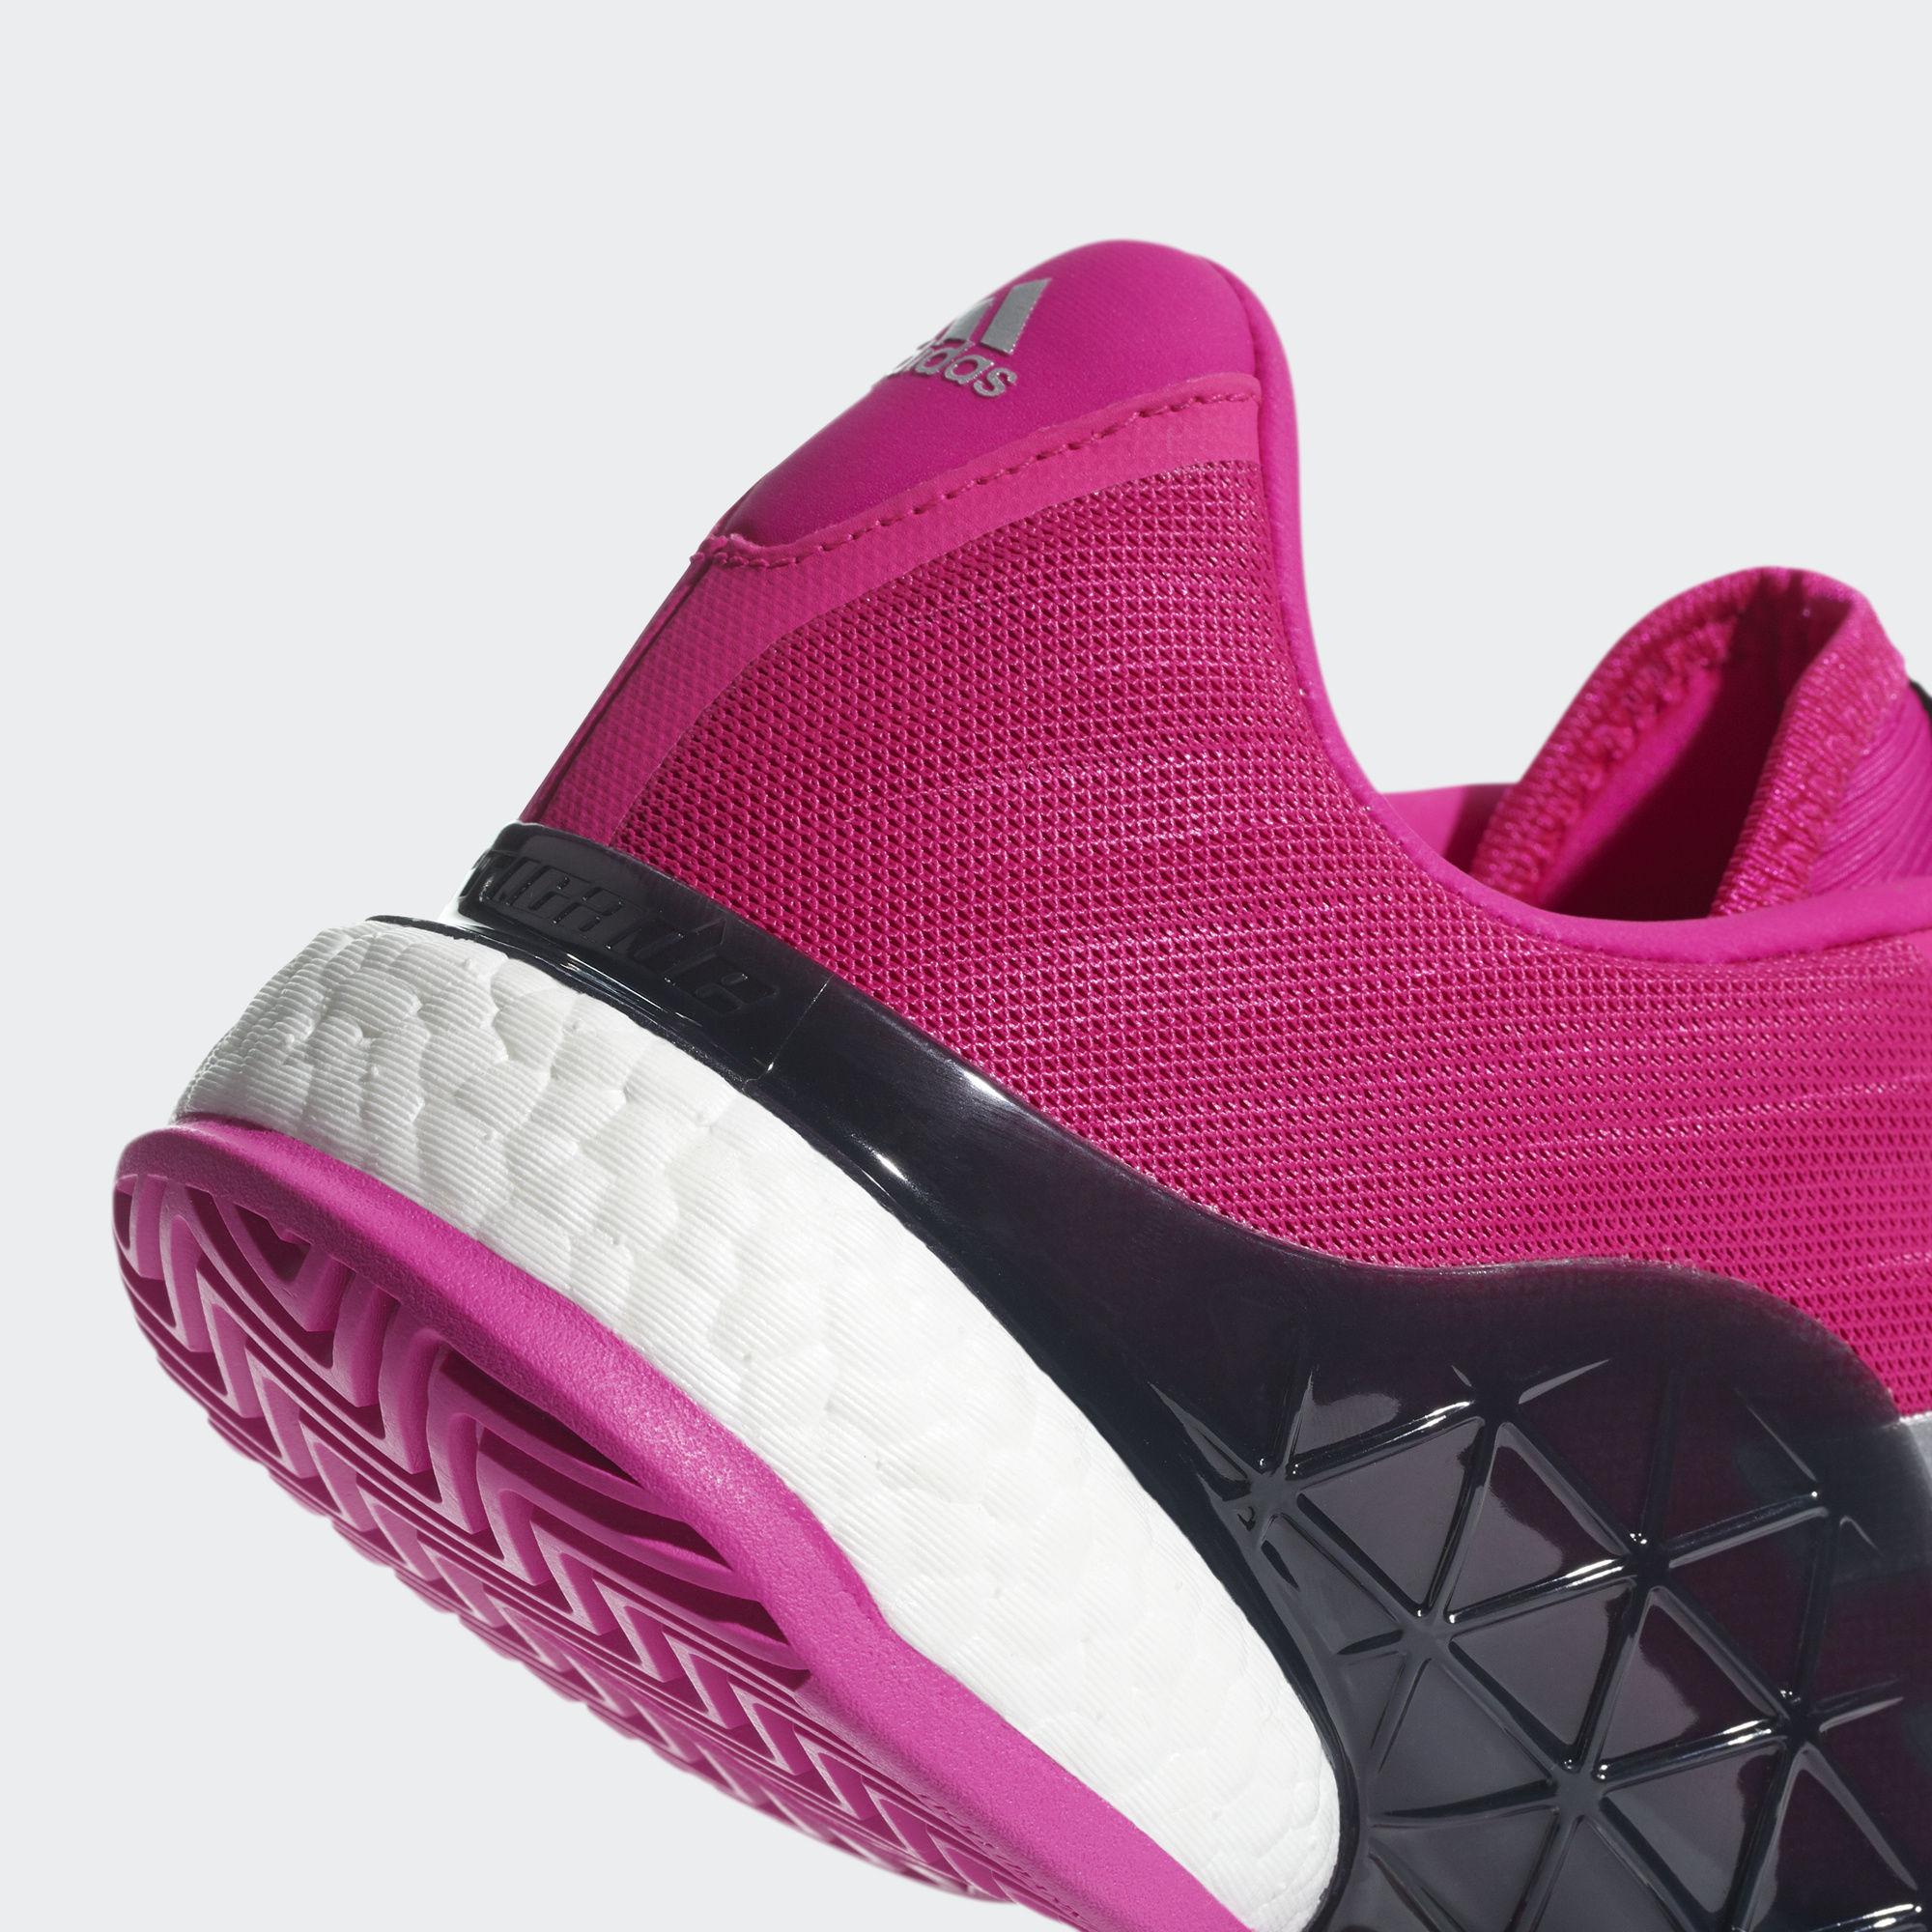 Adidas Mens Barricade Boost 2018 Tennis Shoes Shock Pink